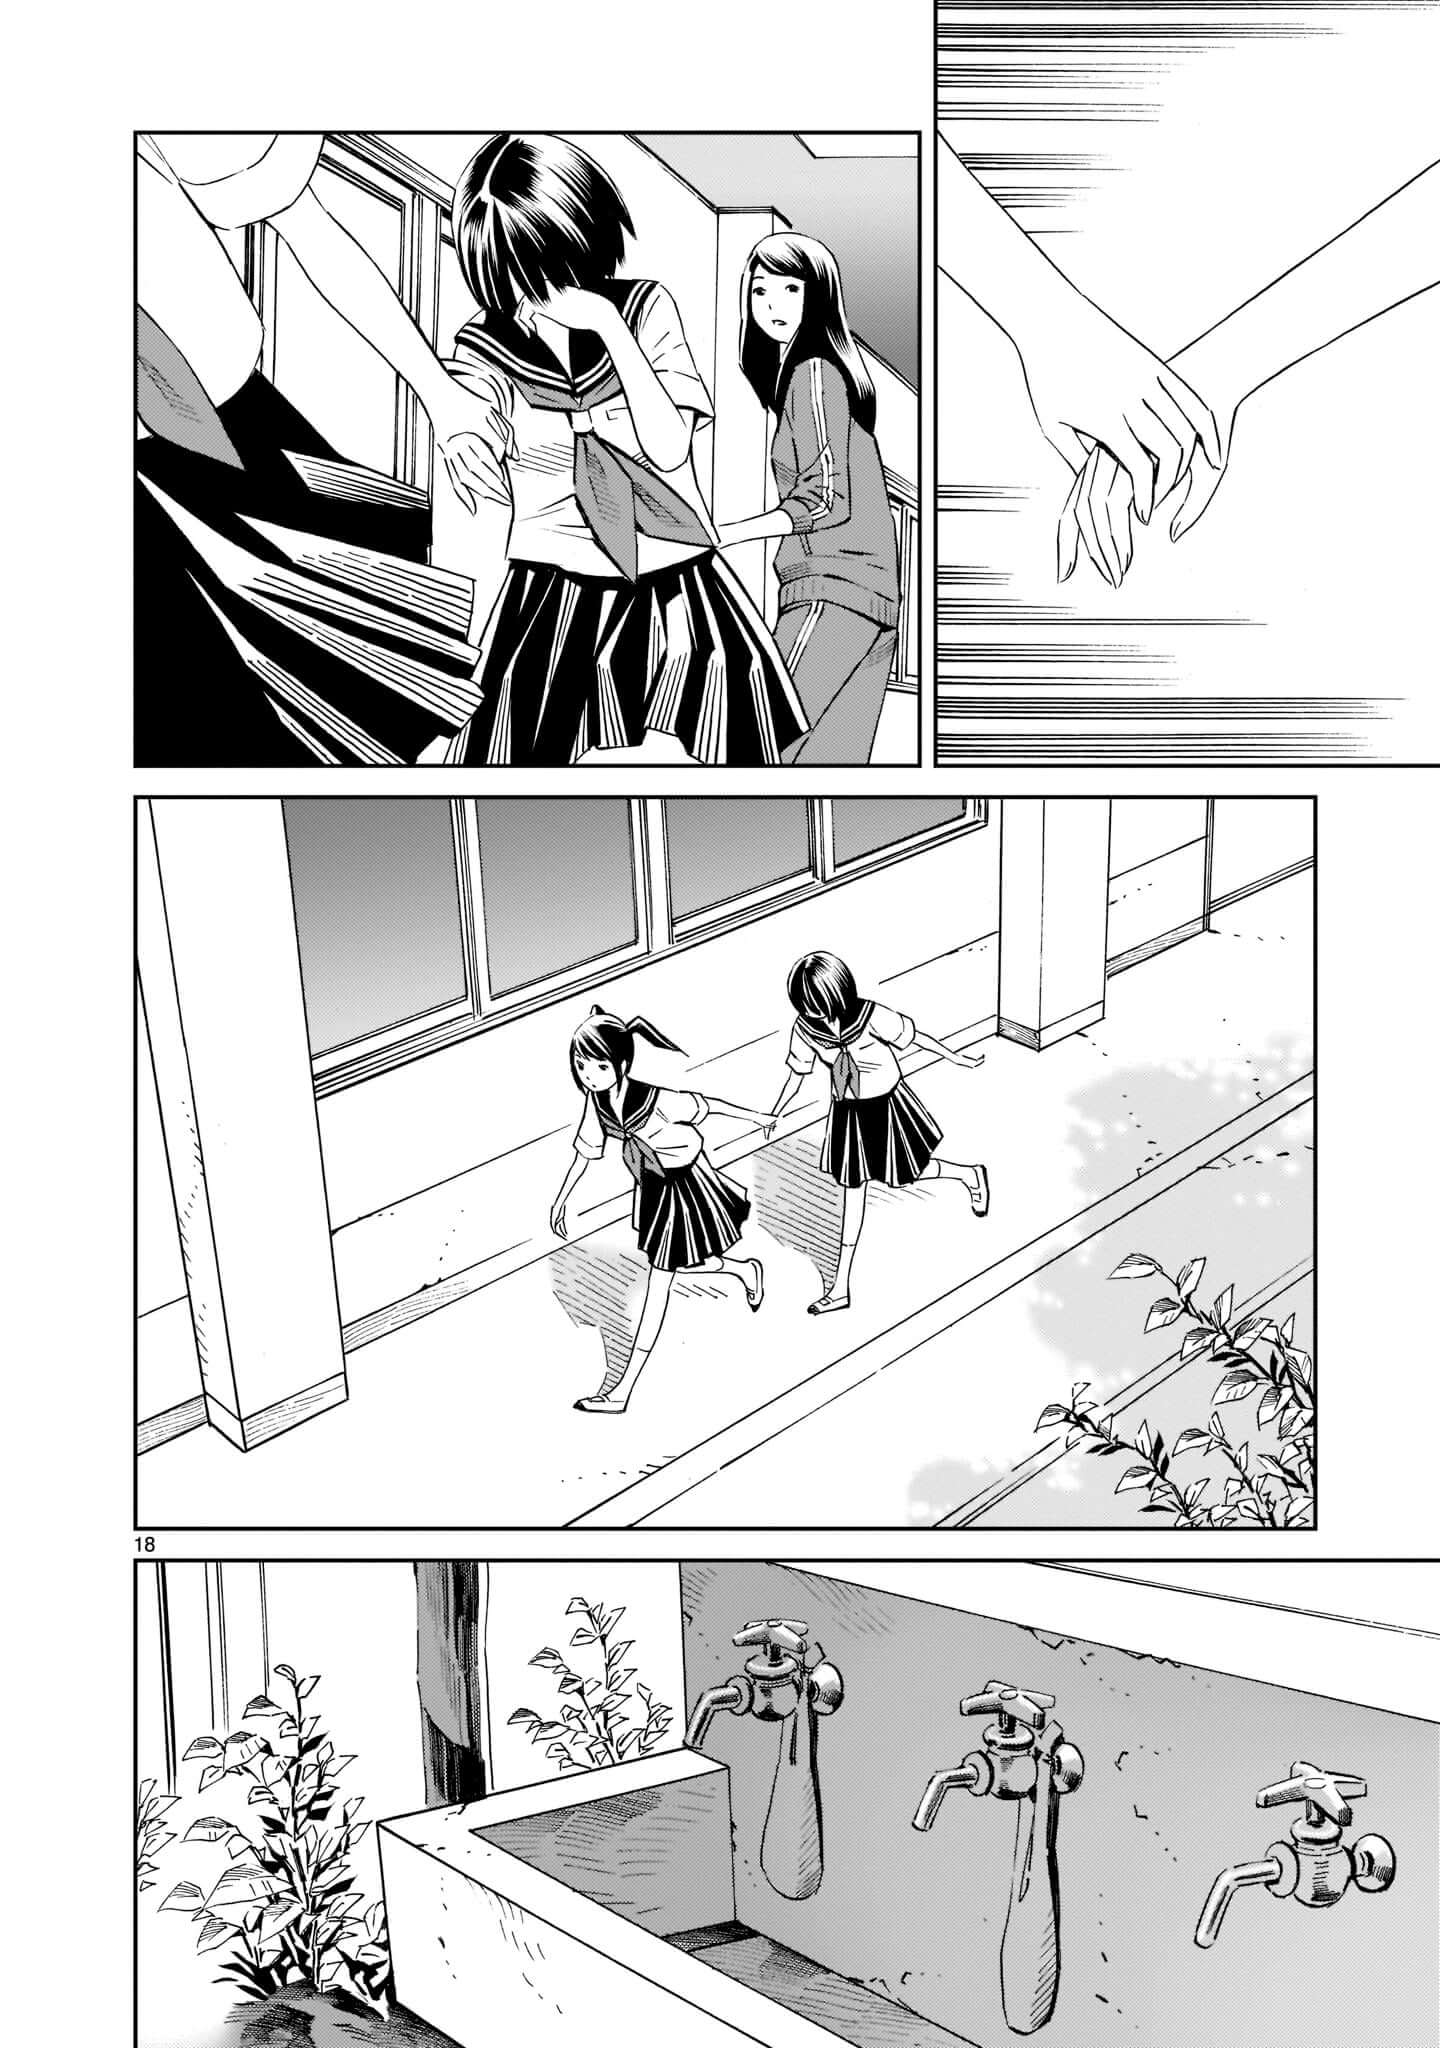 Kyou Kara Mirai - 18 page 18-02ac1fac